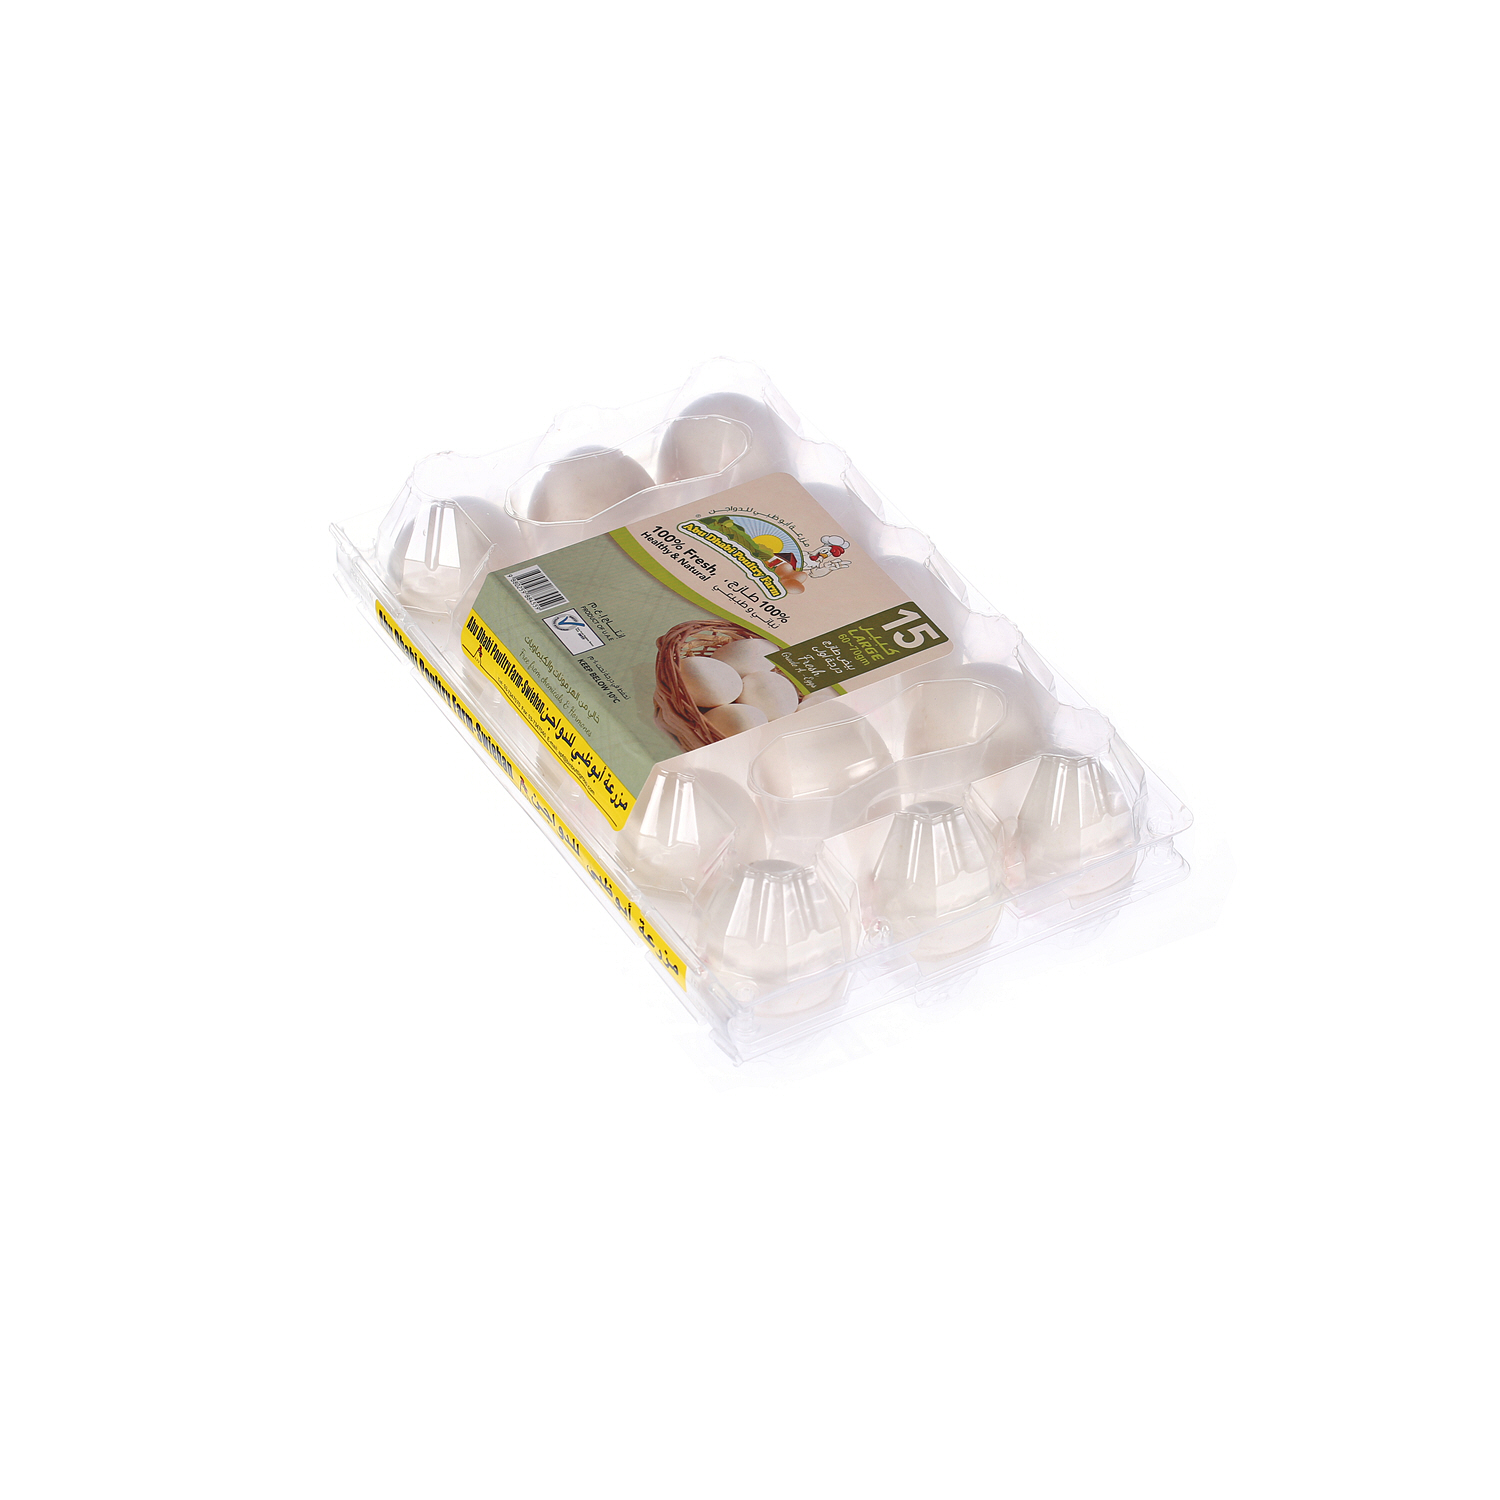 Abu Dhabi Fresh White Eggs Large 15 Pack